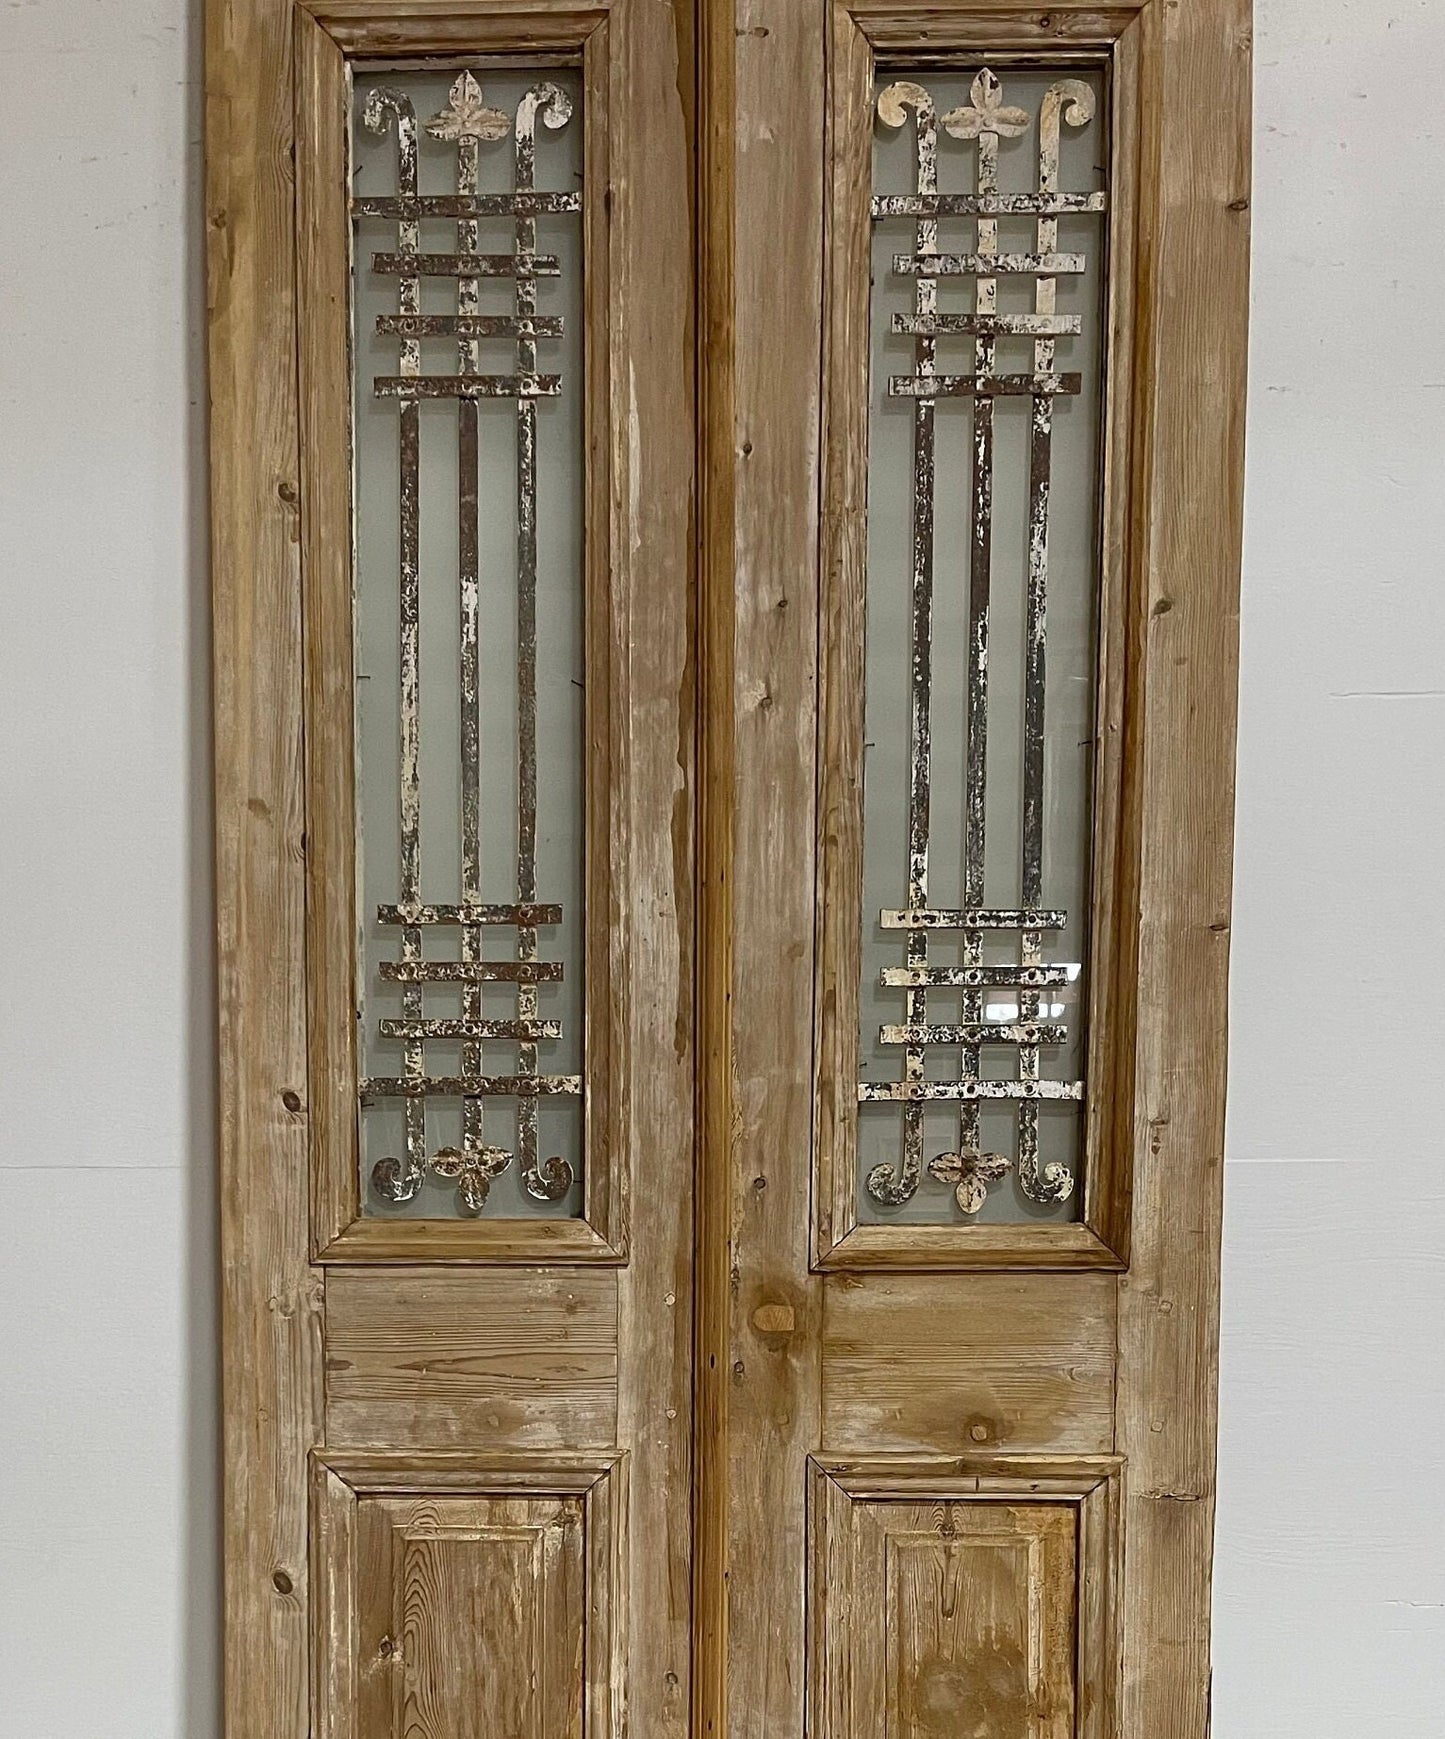 Antique French panel door with metal (98.25x41) G1443s